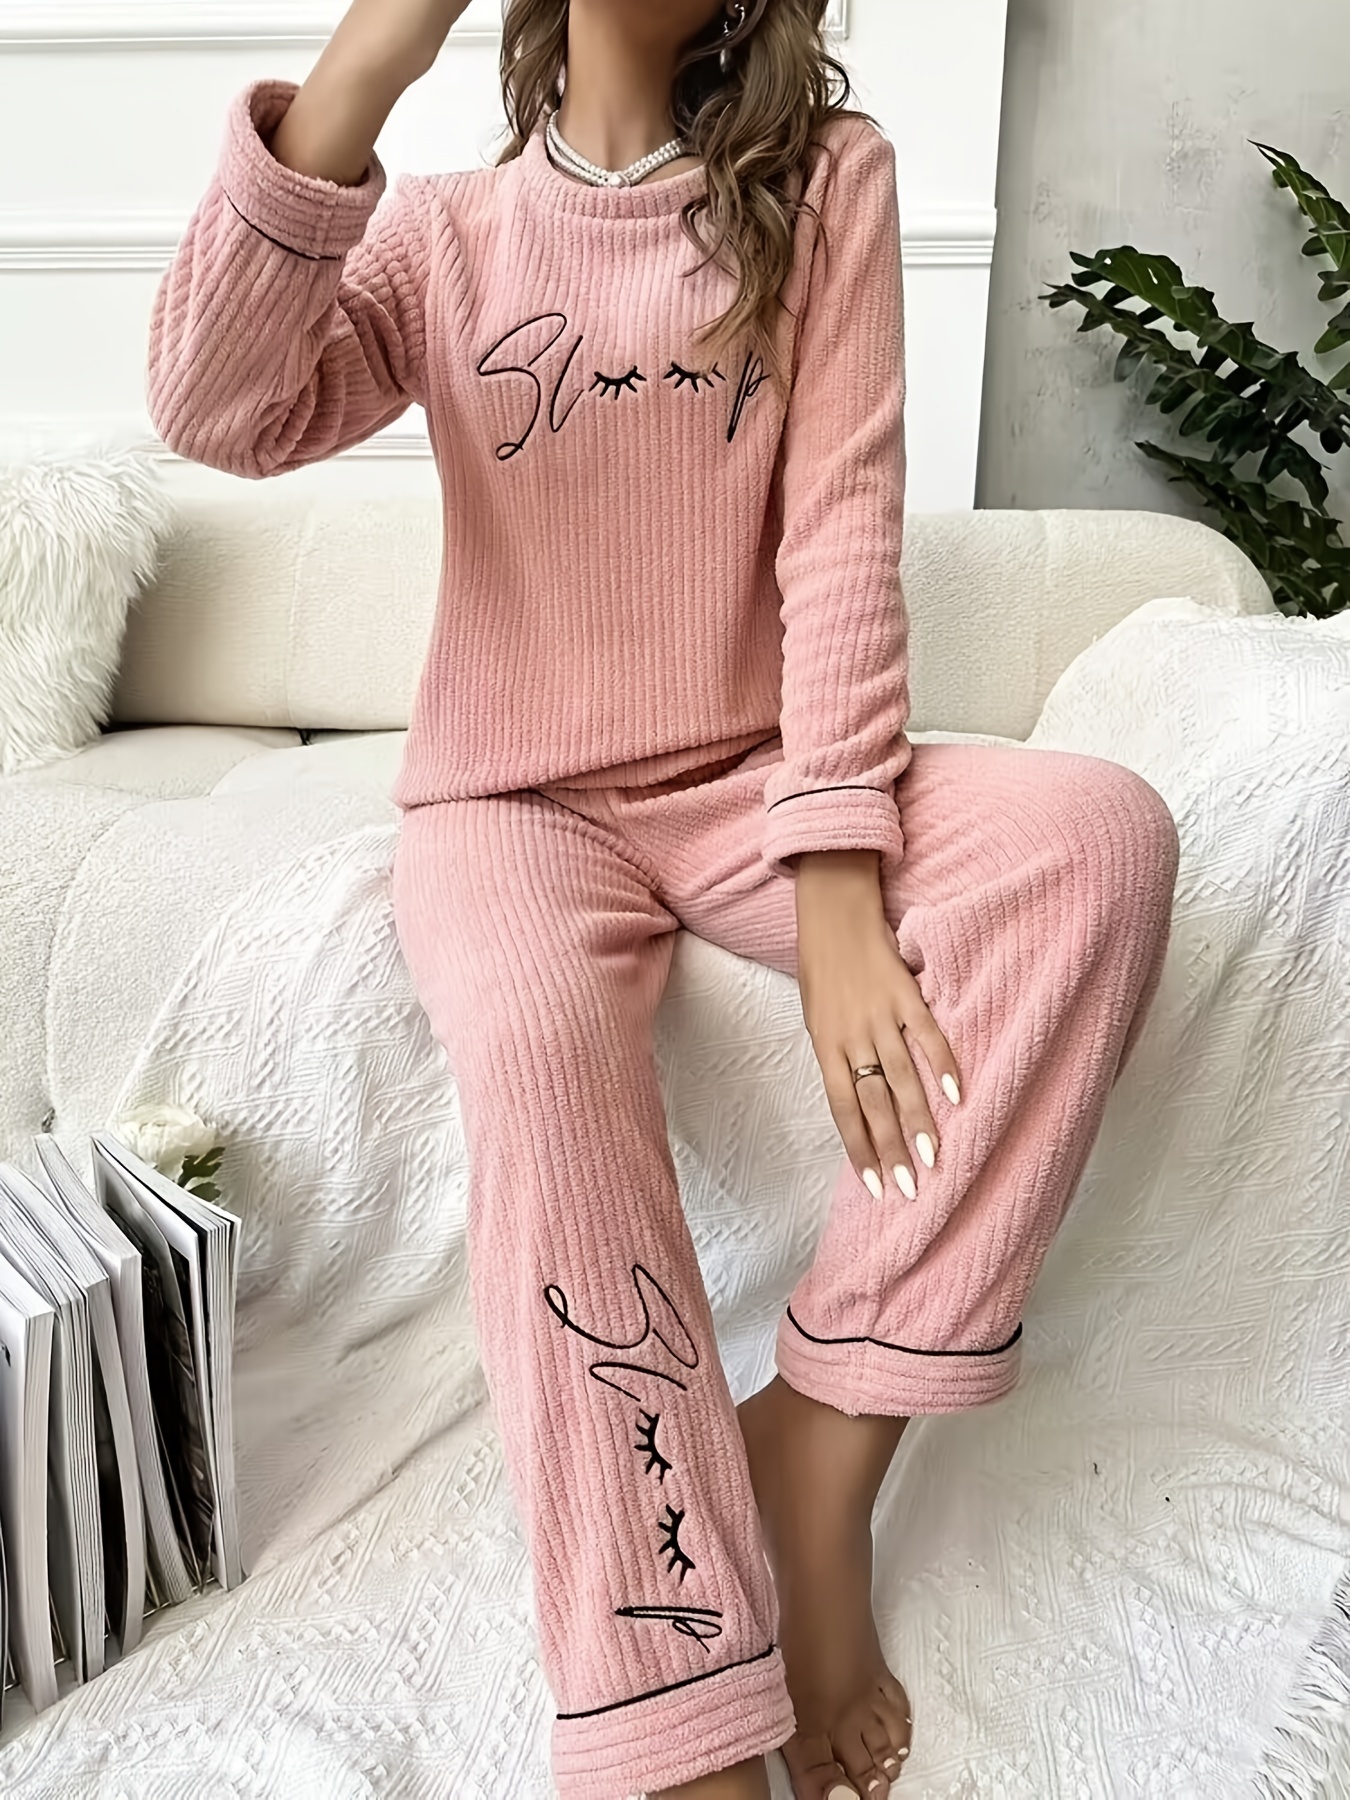 mejores pijamas en pijamalindo.com